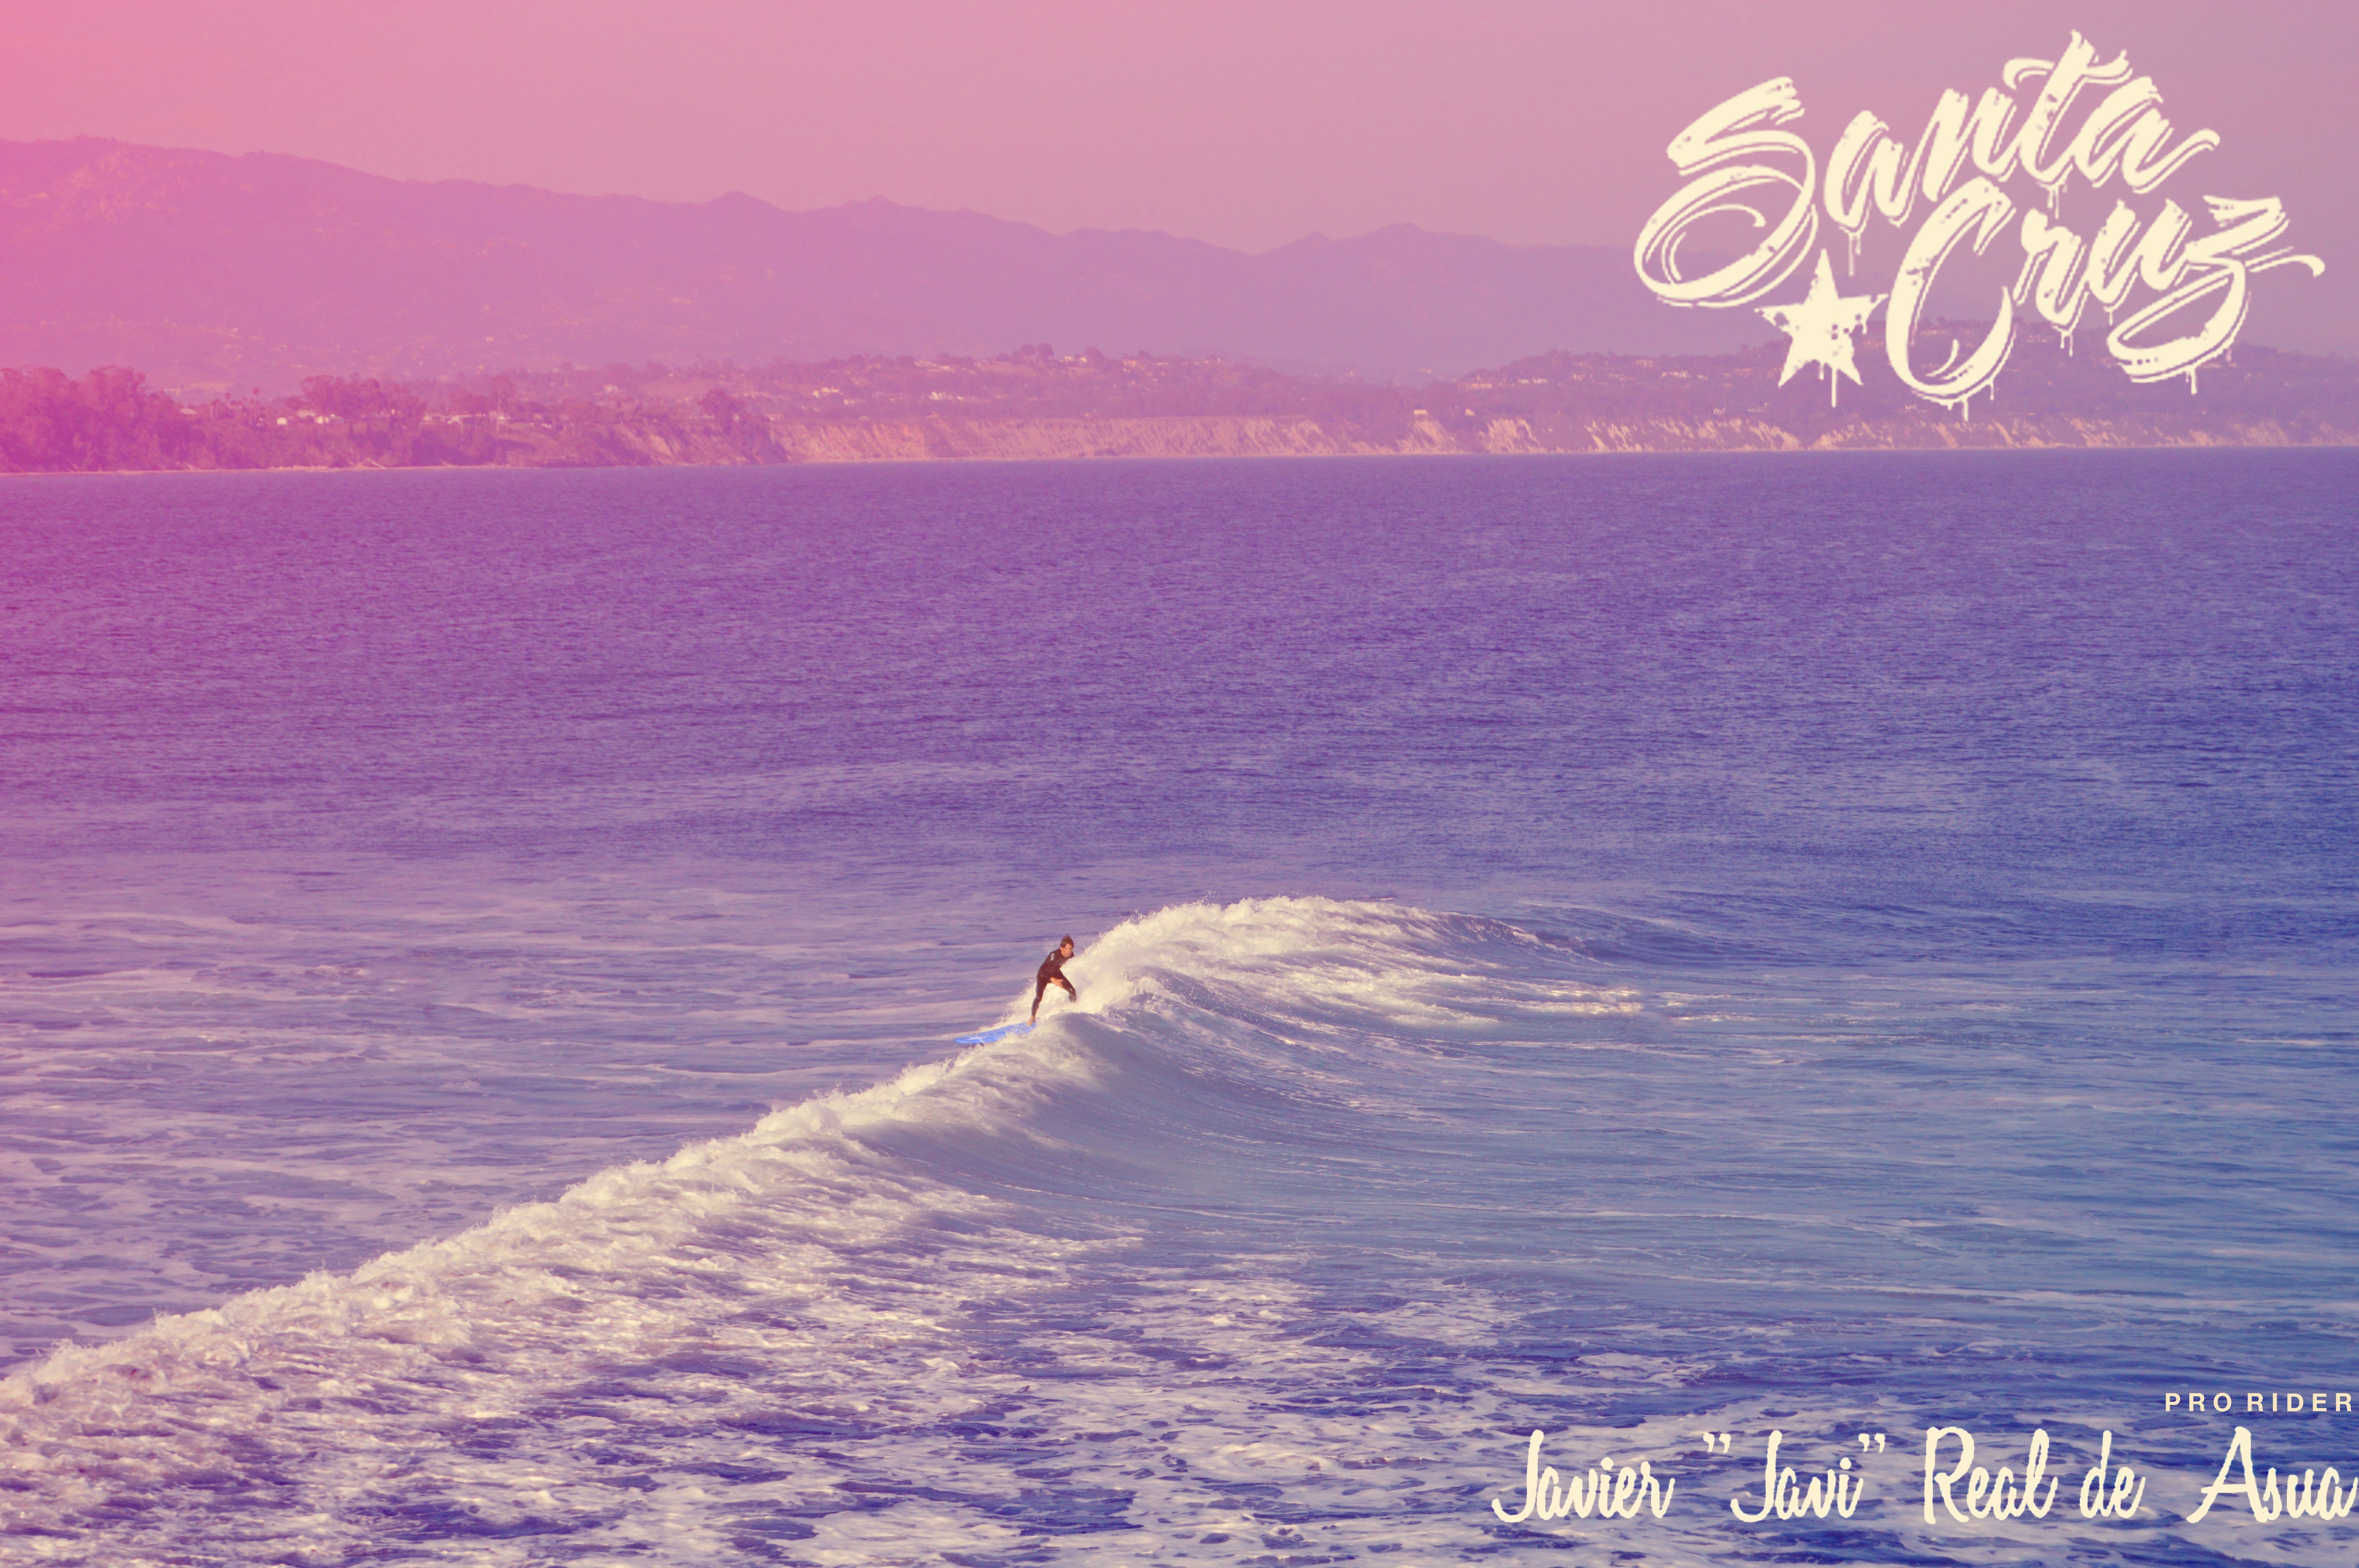 filter, Photoshop, Surfing, Santa cruz (california) Wallpaper